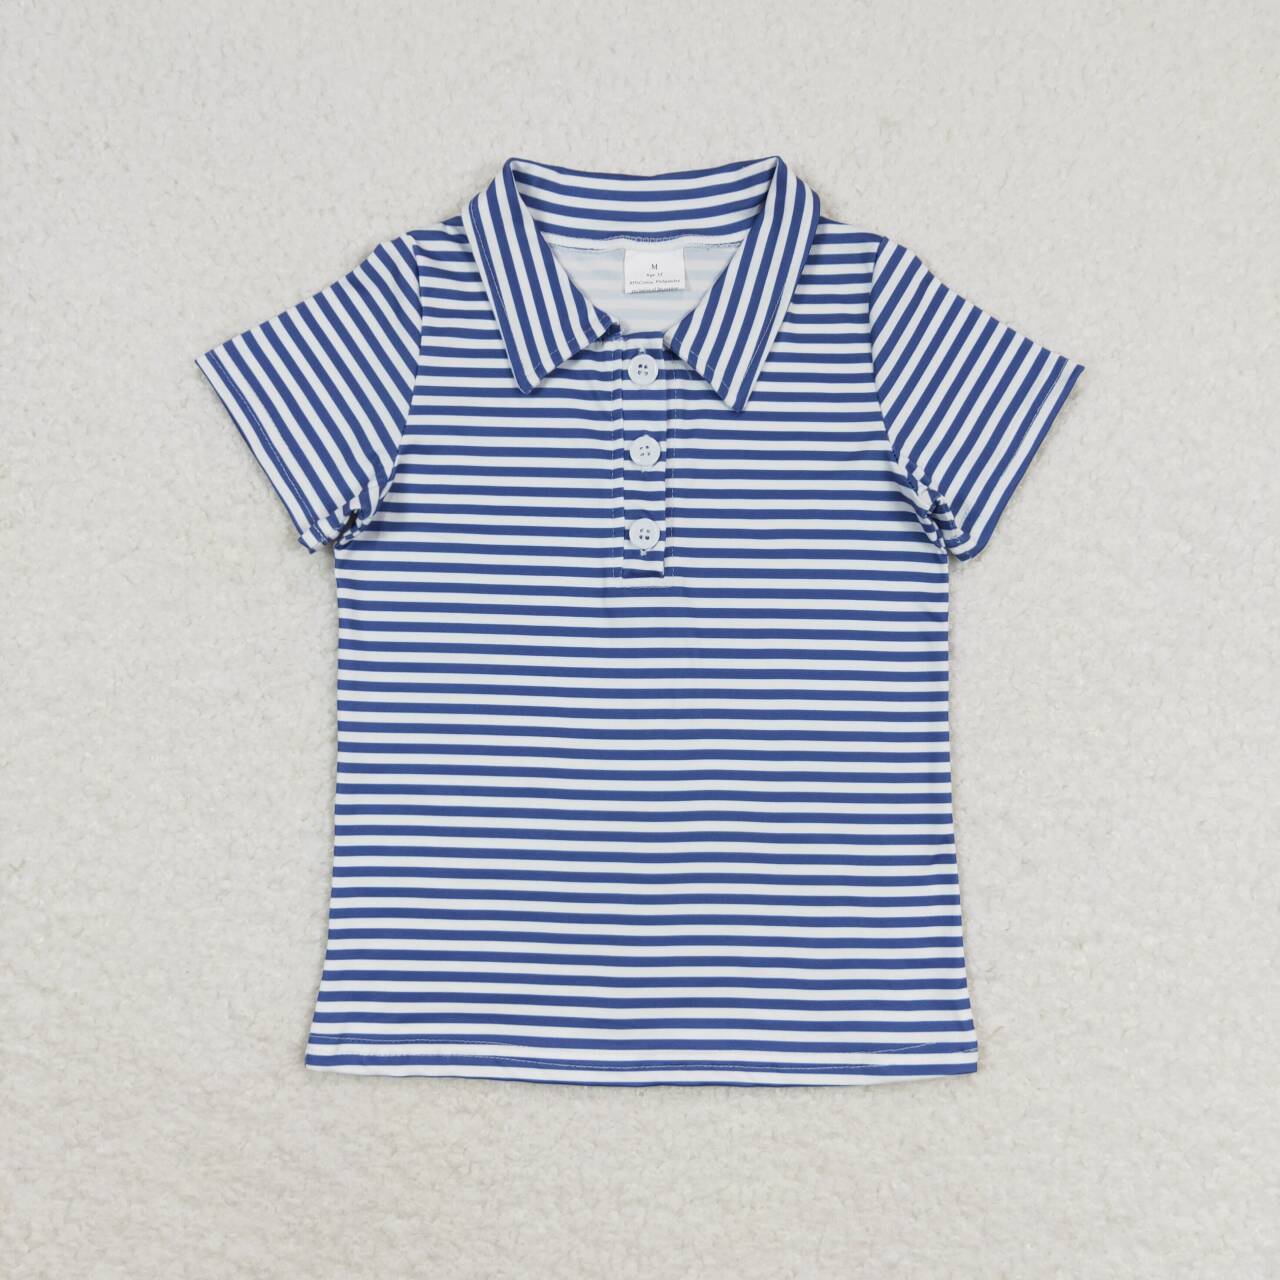 BT0654  Navy Stripes Print Boys Summer Polo Tee Shirts Top